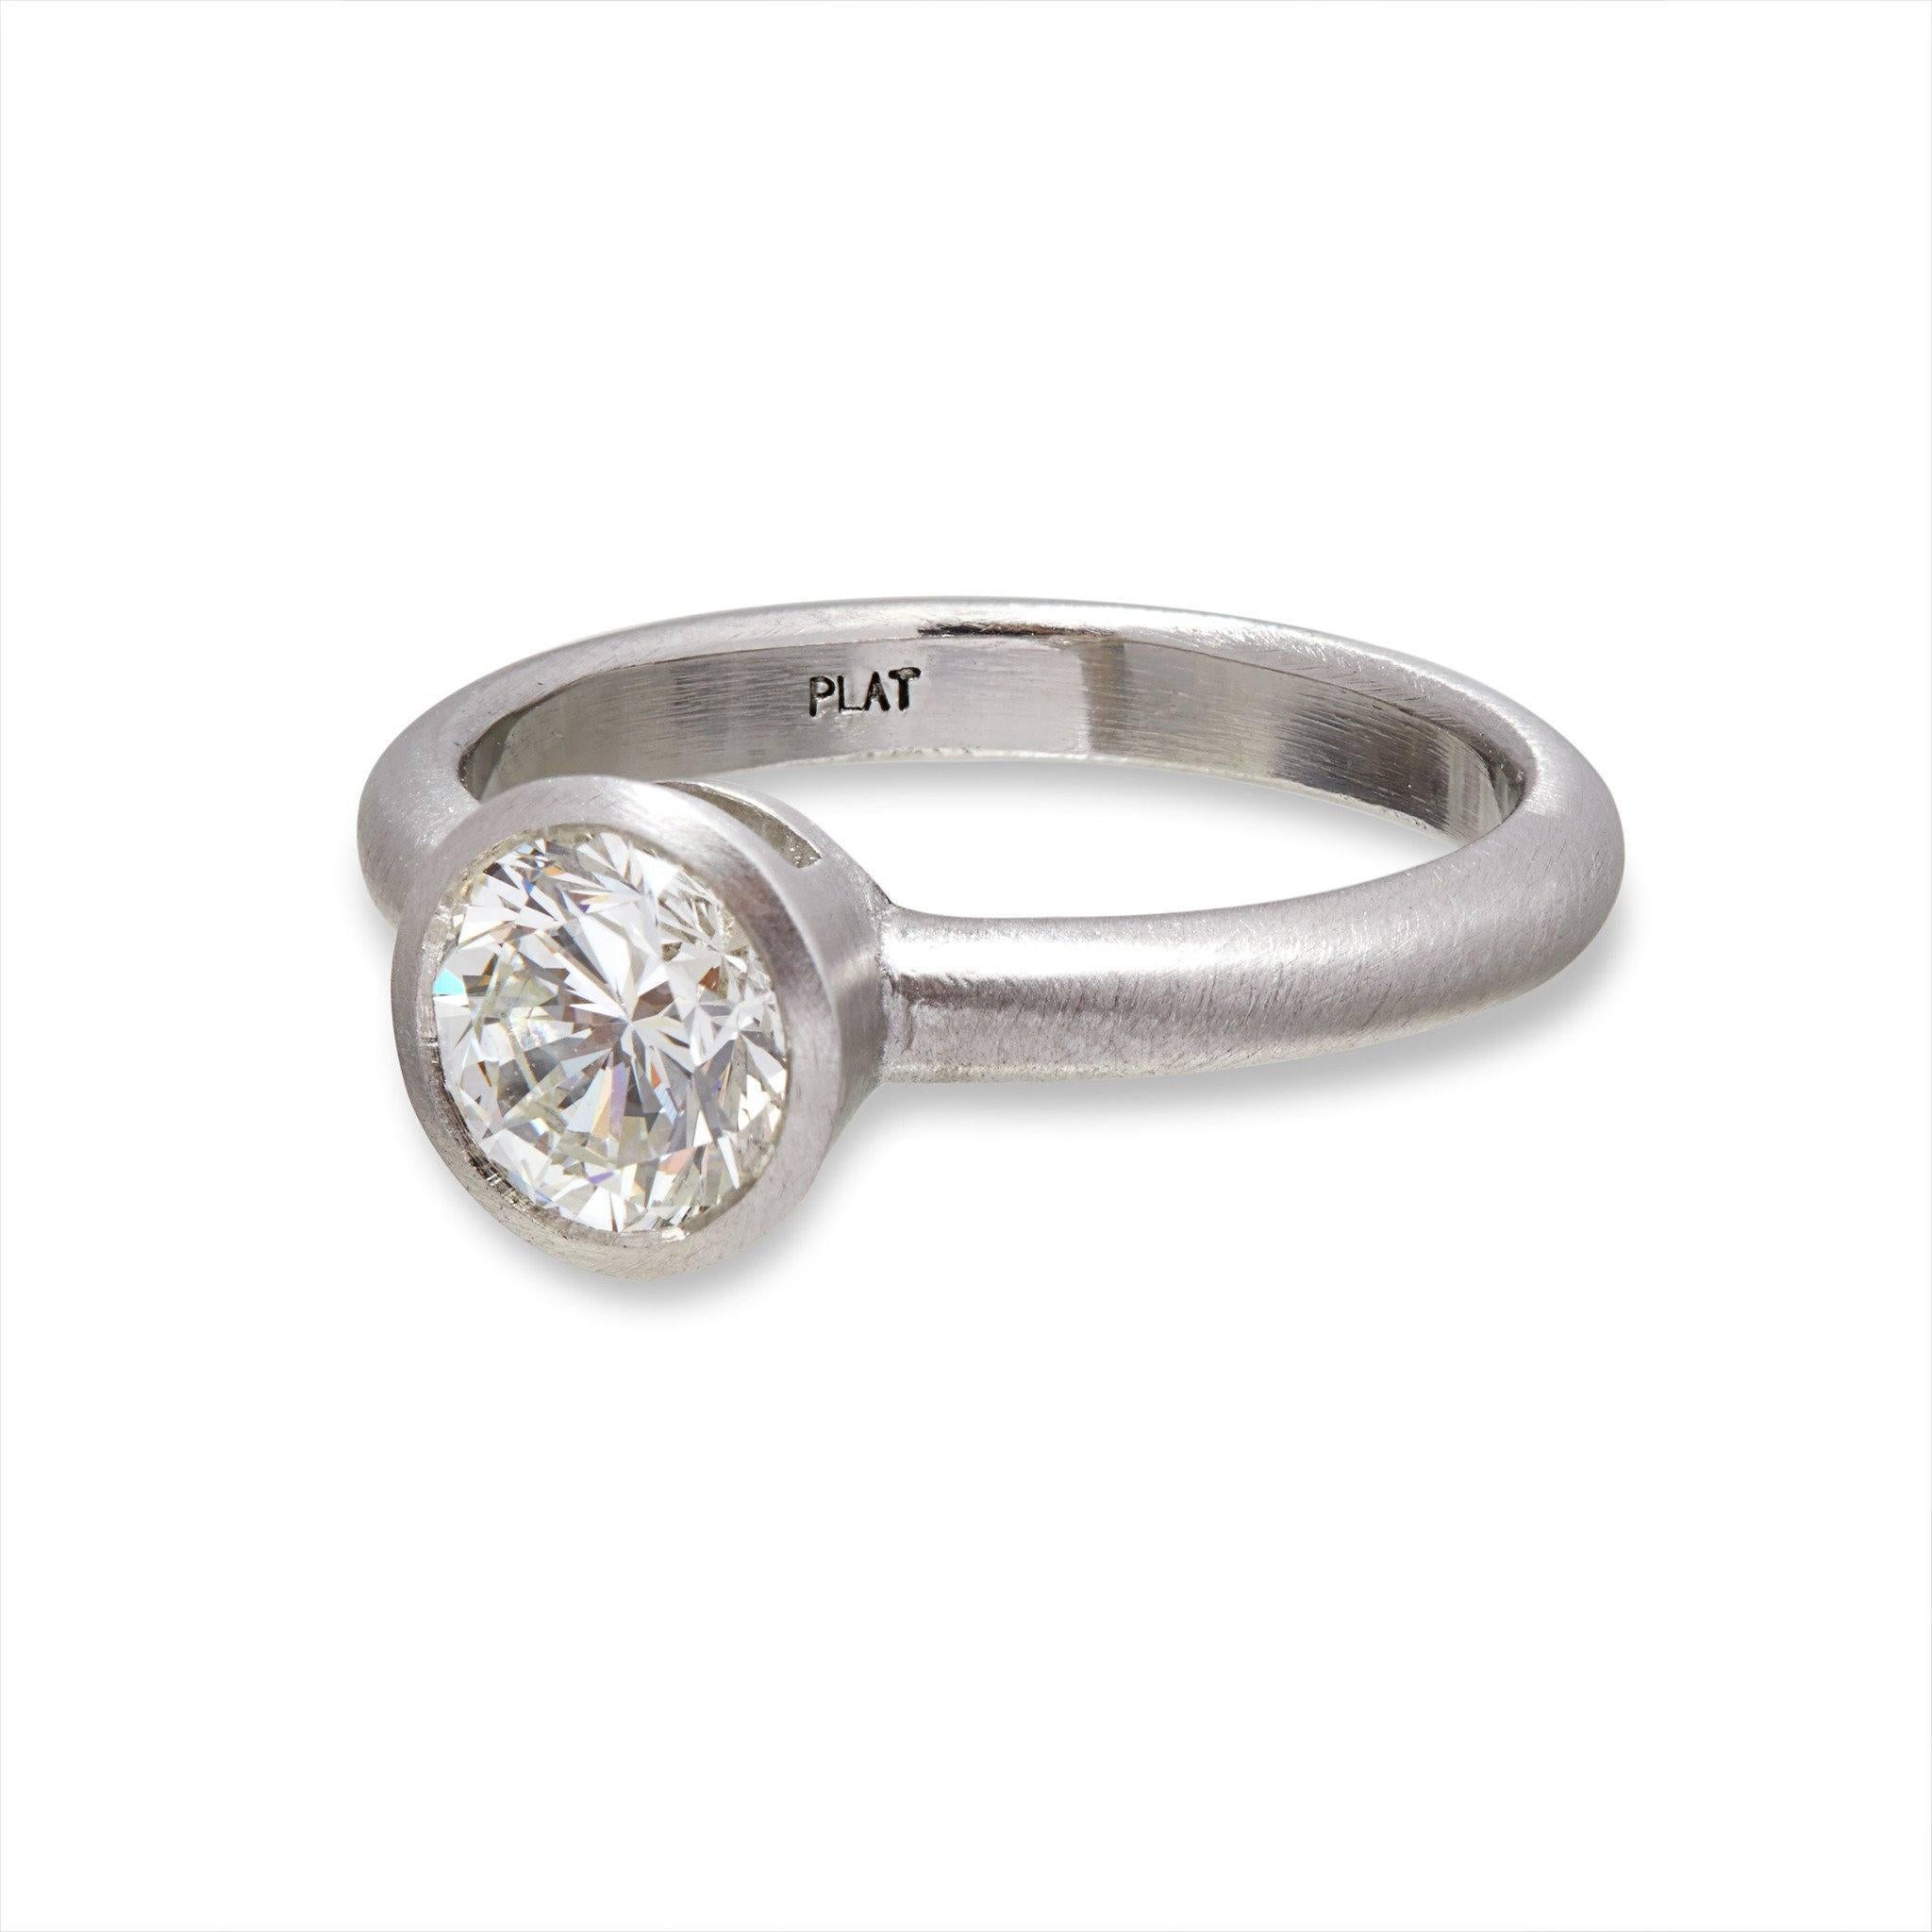 Contemporary GIA Certified 1.17 Carat Diamond Engagement Ring in Platinum